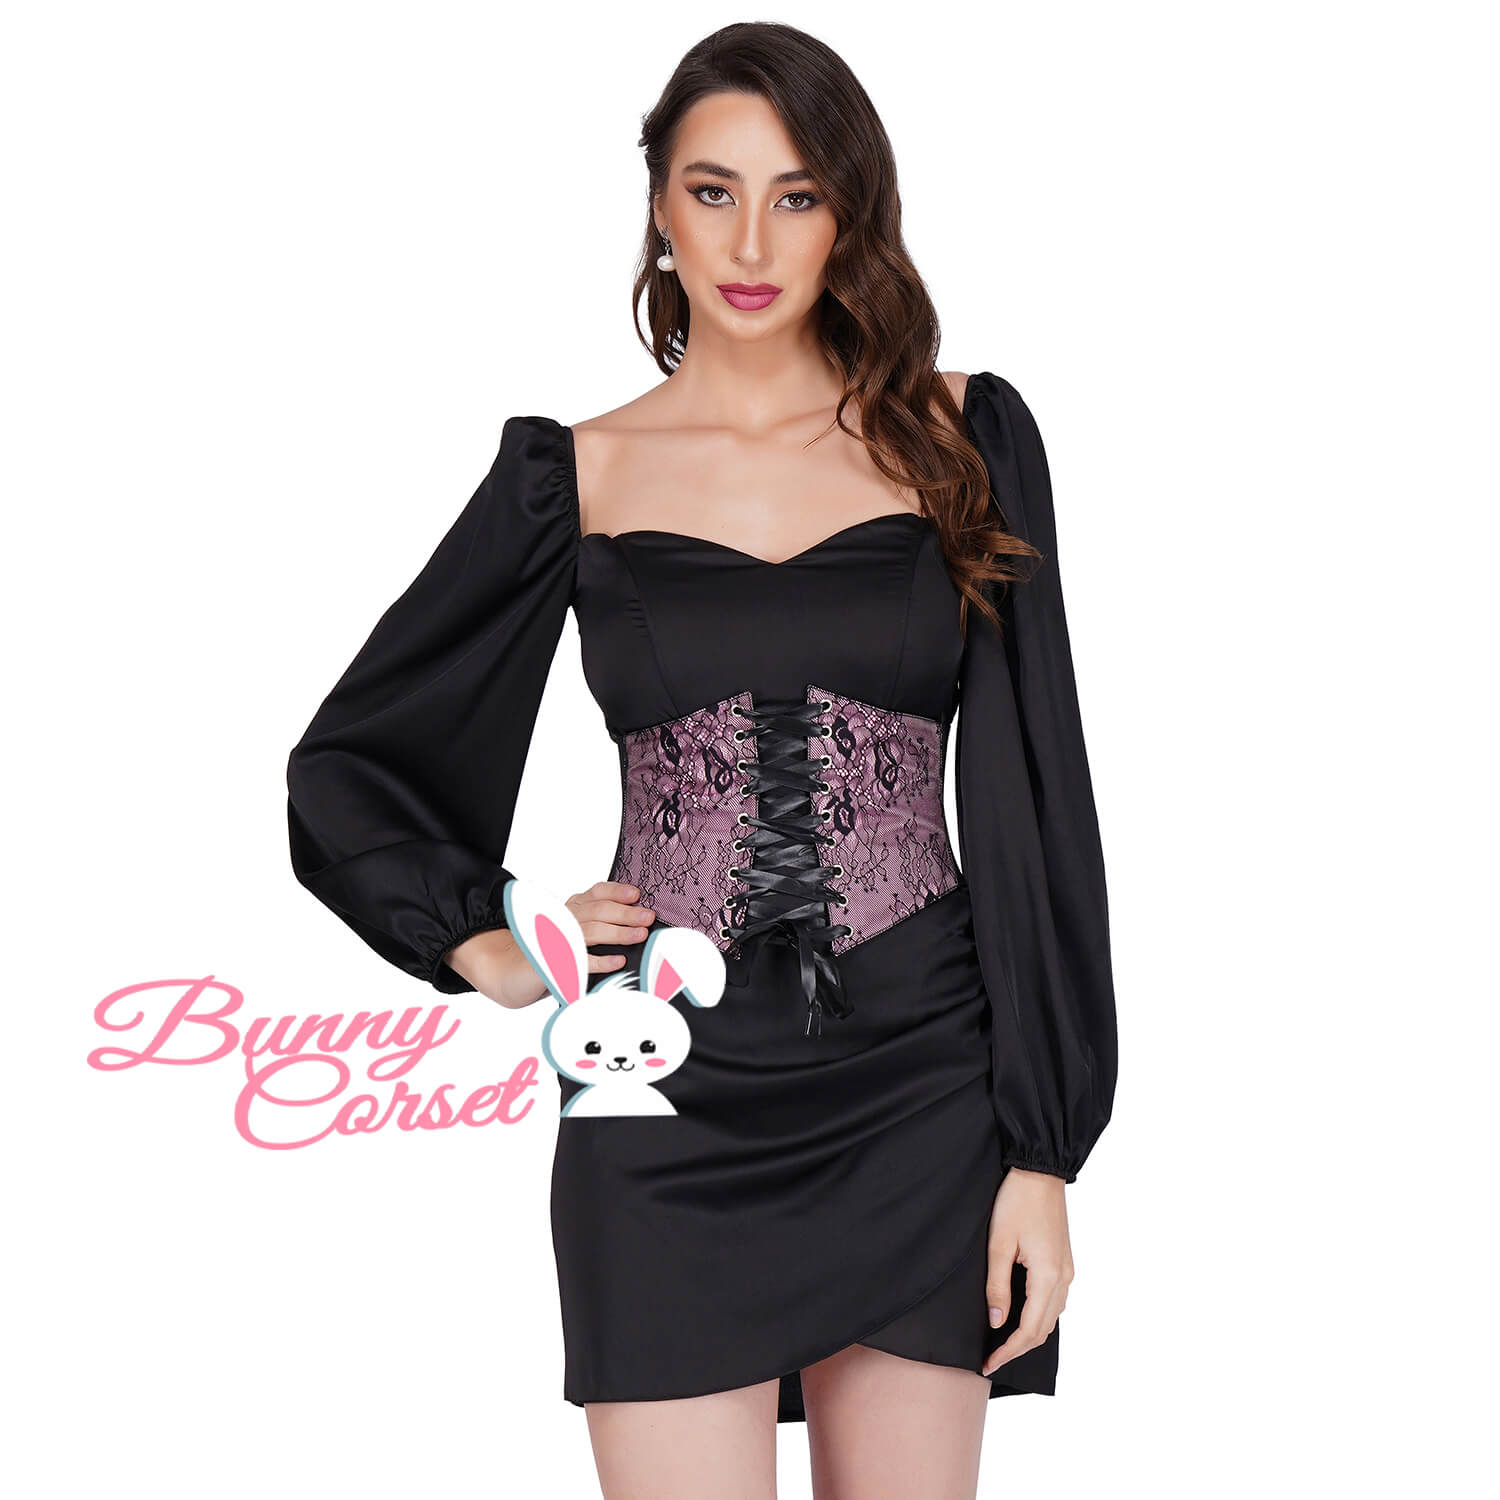 Ellasyn Pink Corset Belt for new look – Bunny Corset